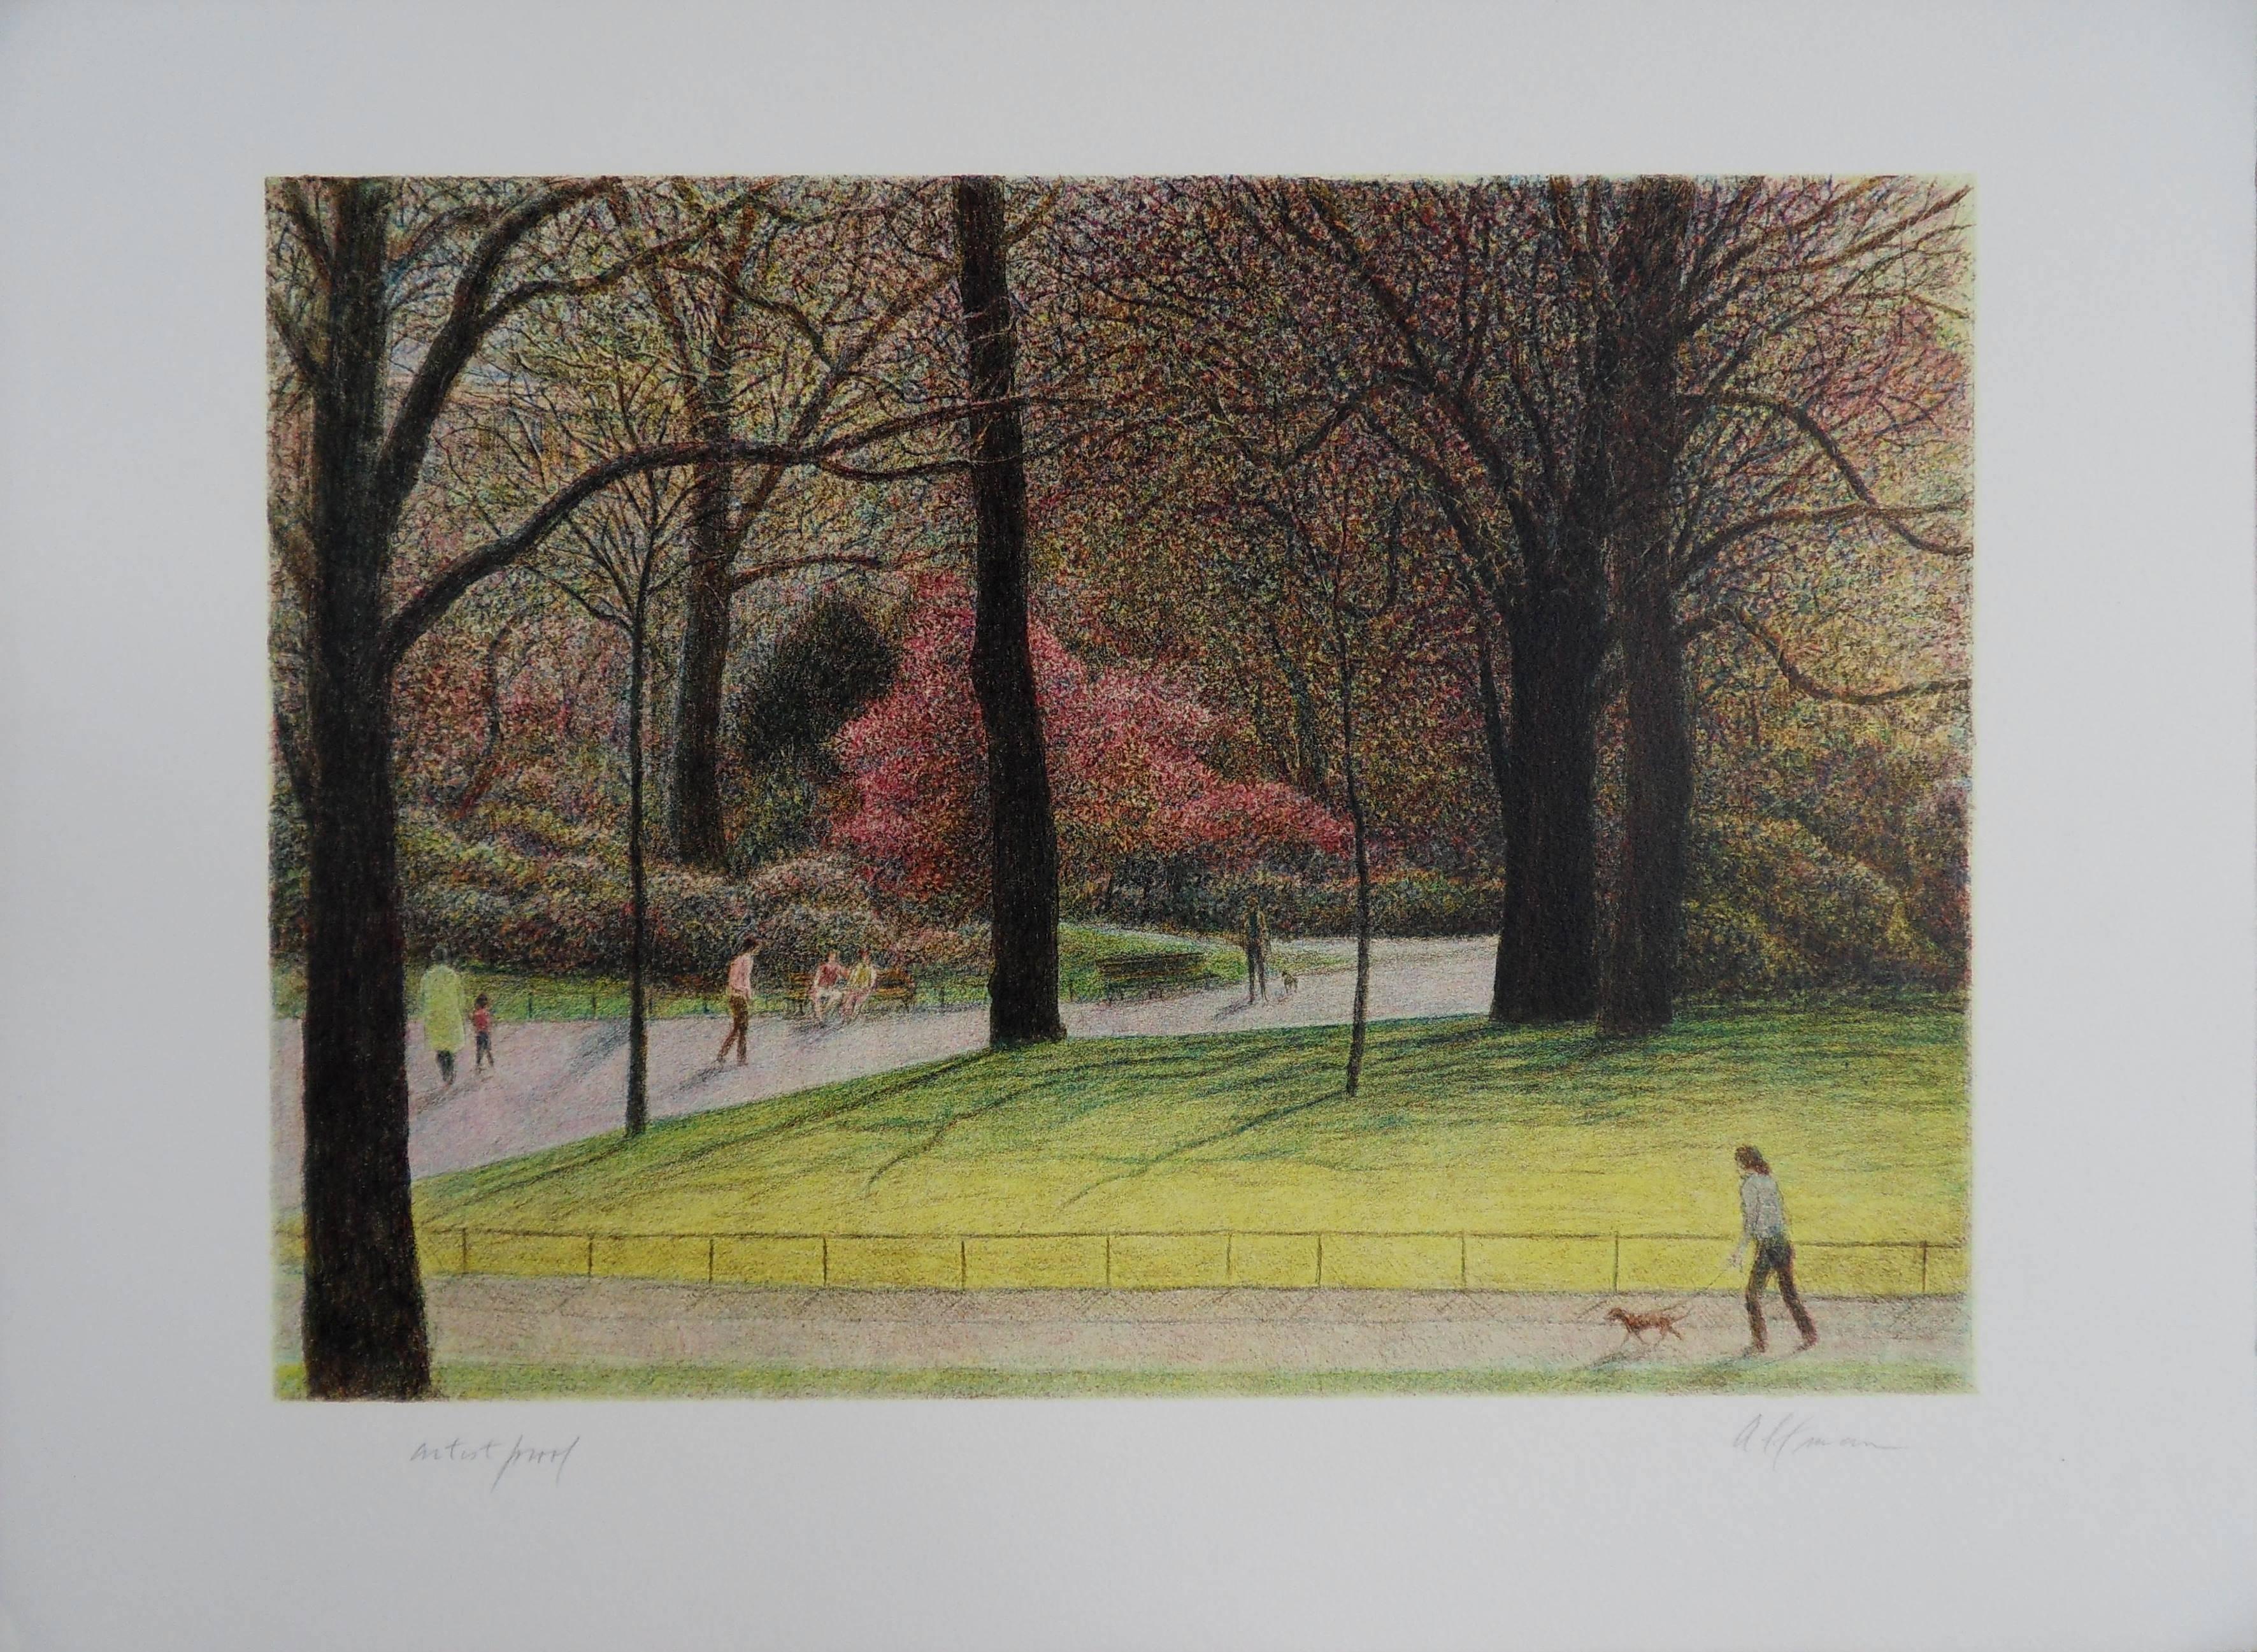 Harold Altman Landscape Print - Central Park Views : A Walk With The Dog - Original handsigned lithograph